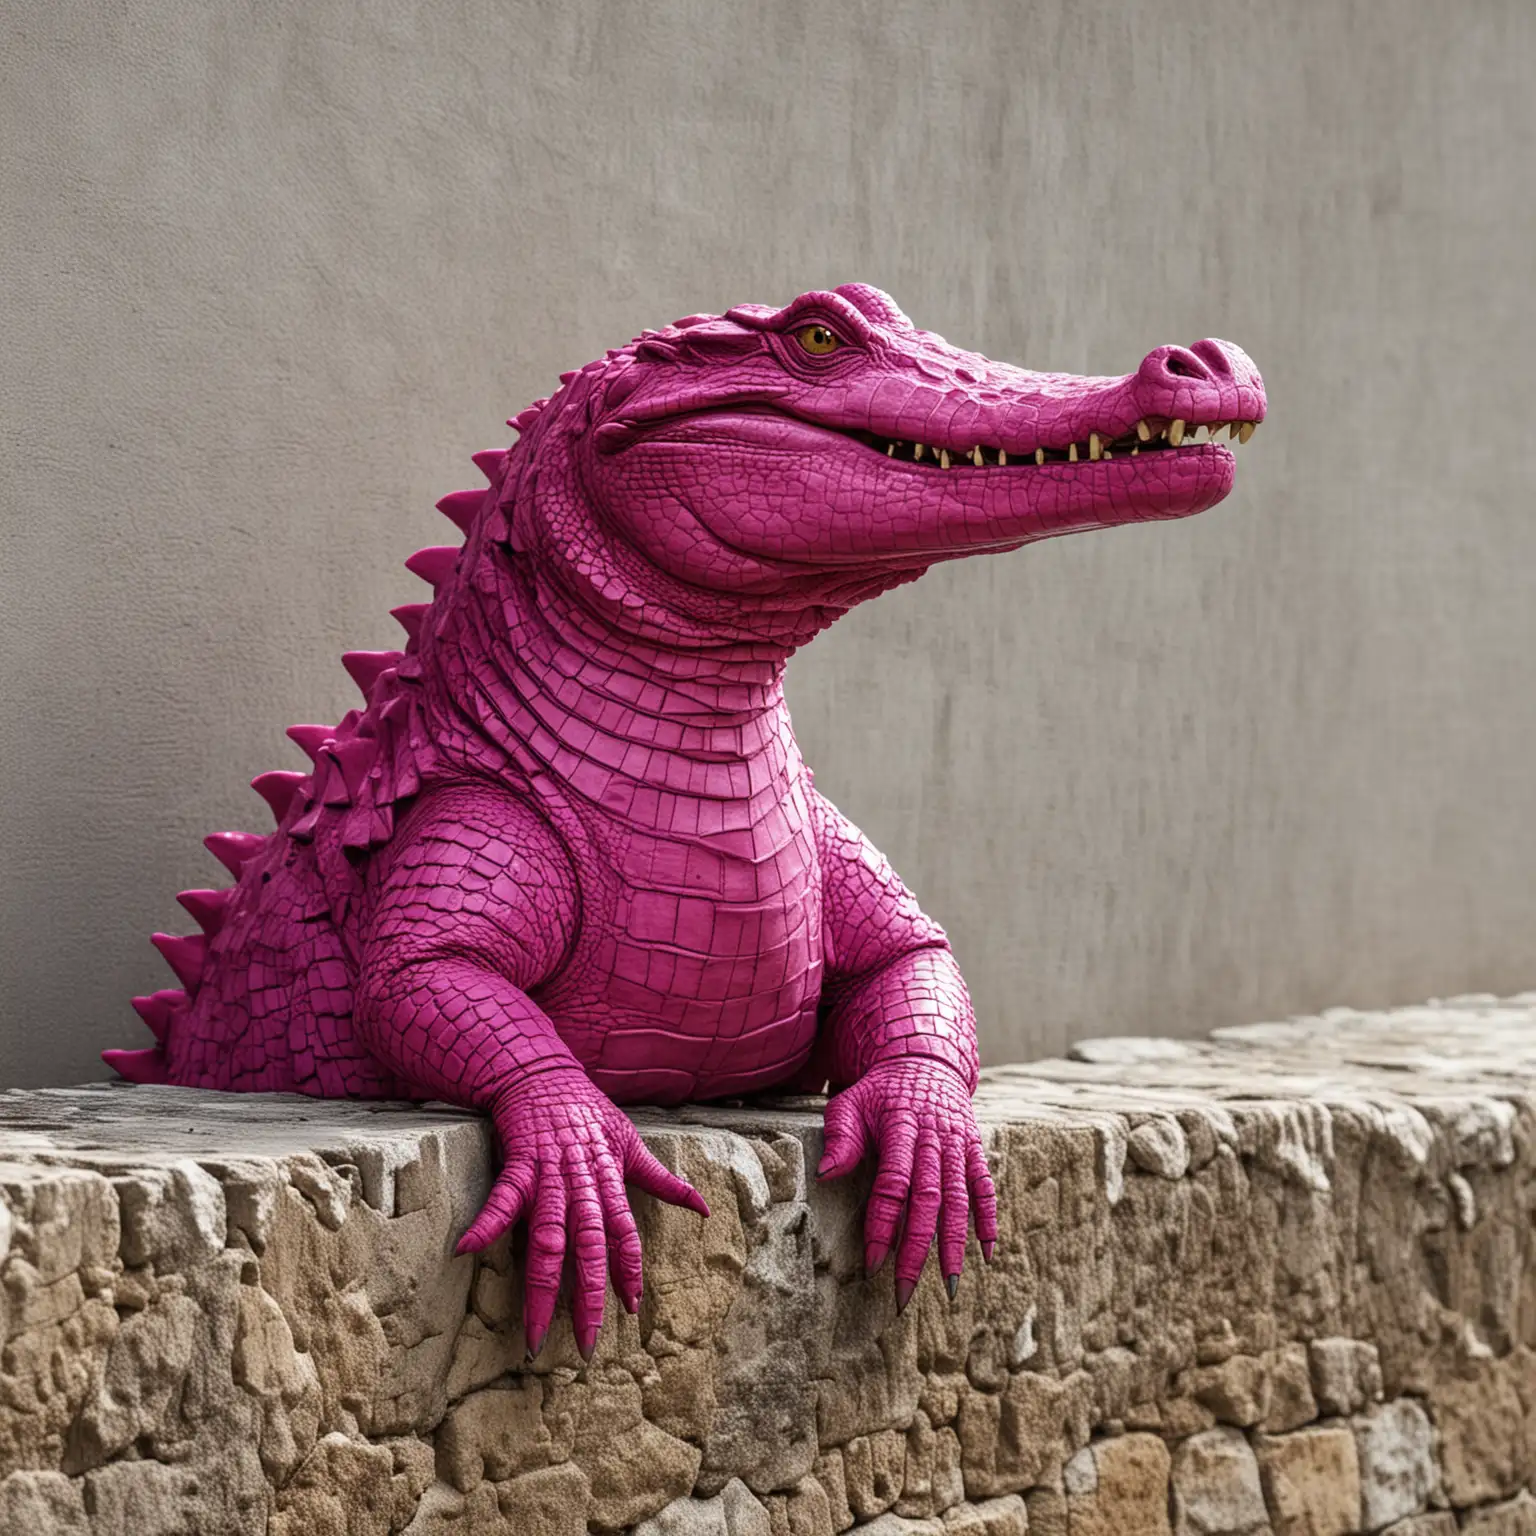 Magenta Crocodile Sitting on a Wall in a Vibrant Urban Scene